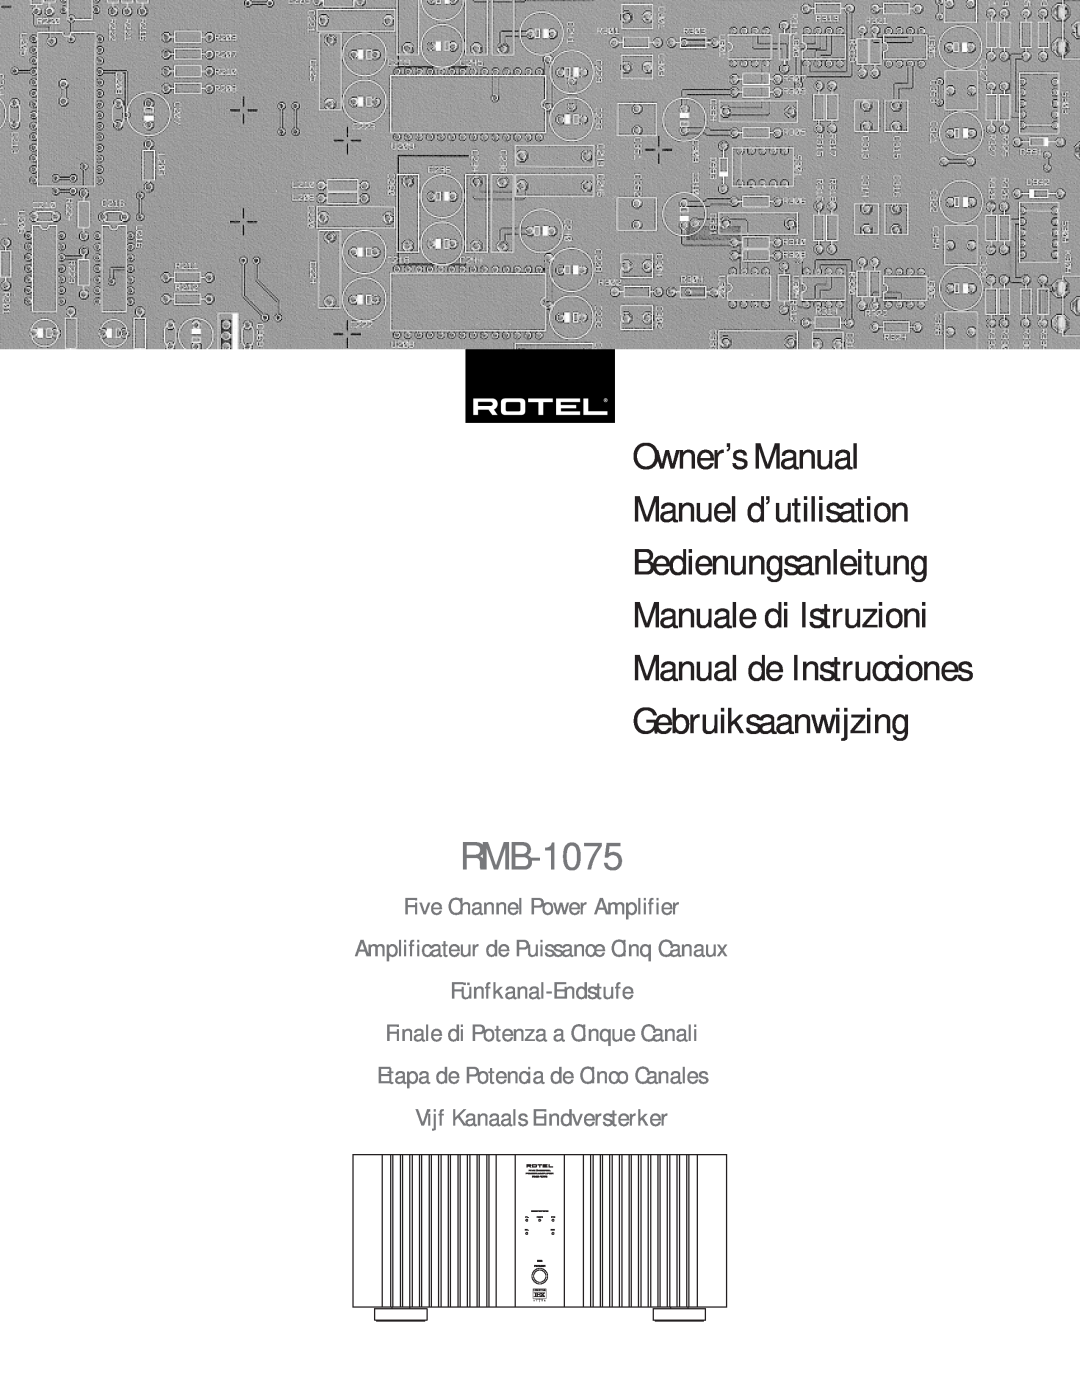 Rotel RMB-1075 owner manual Manuale di Istruzioni Manual de Instrucciones, Gebruiksaanwijzing, Bedienungsanleitung 